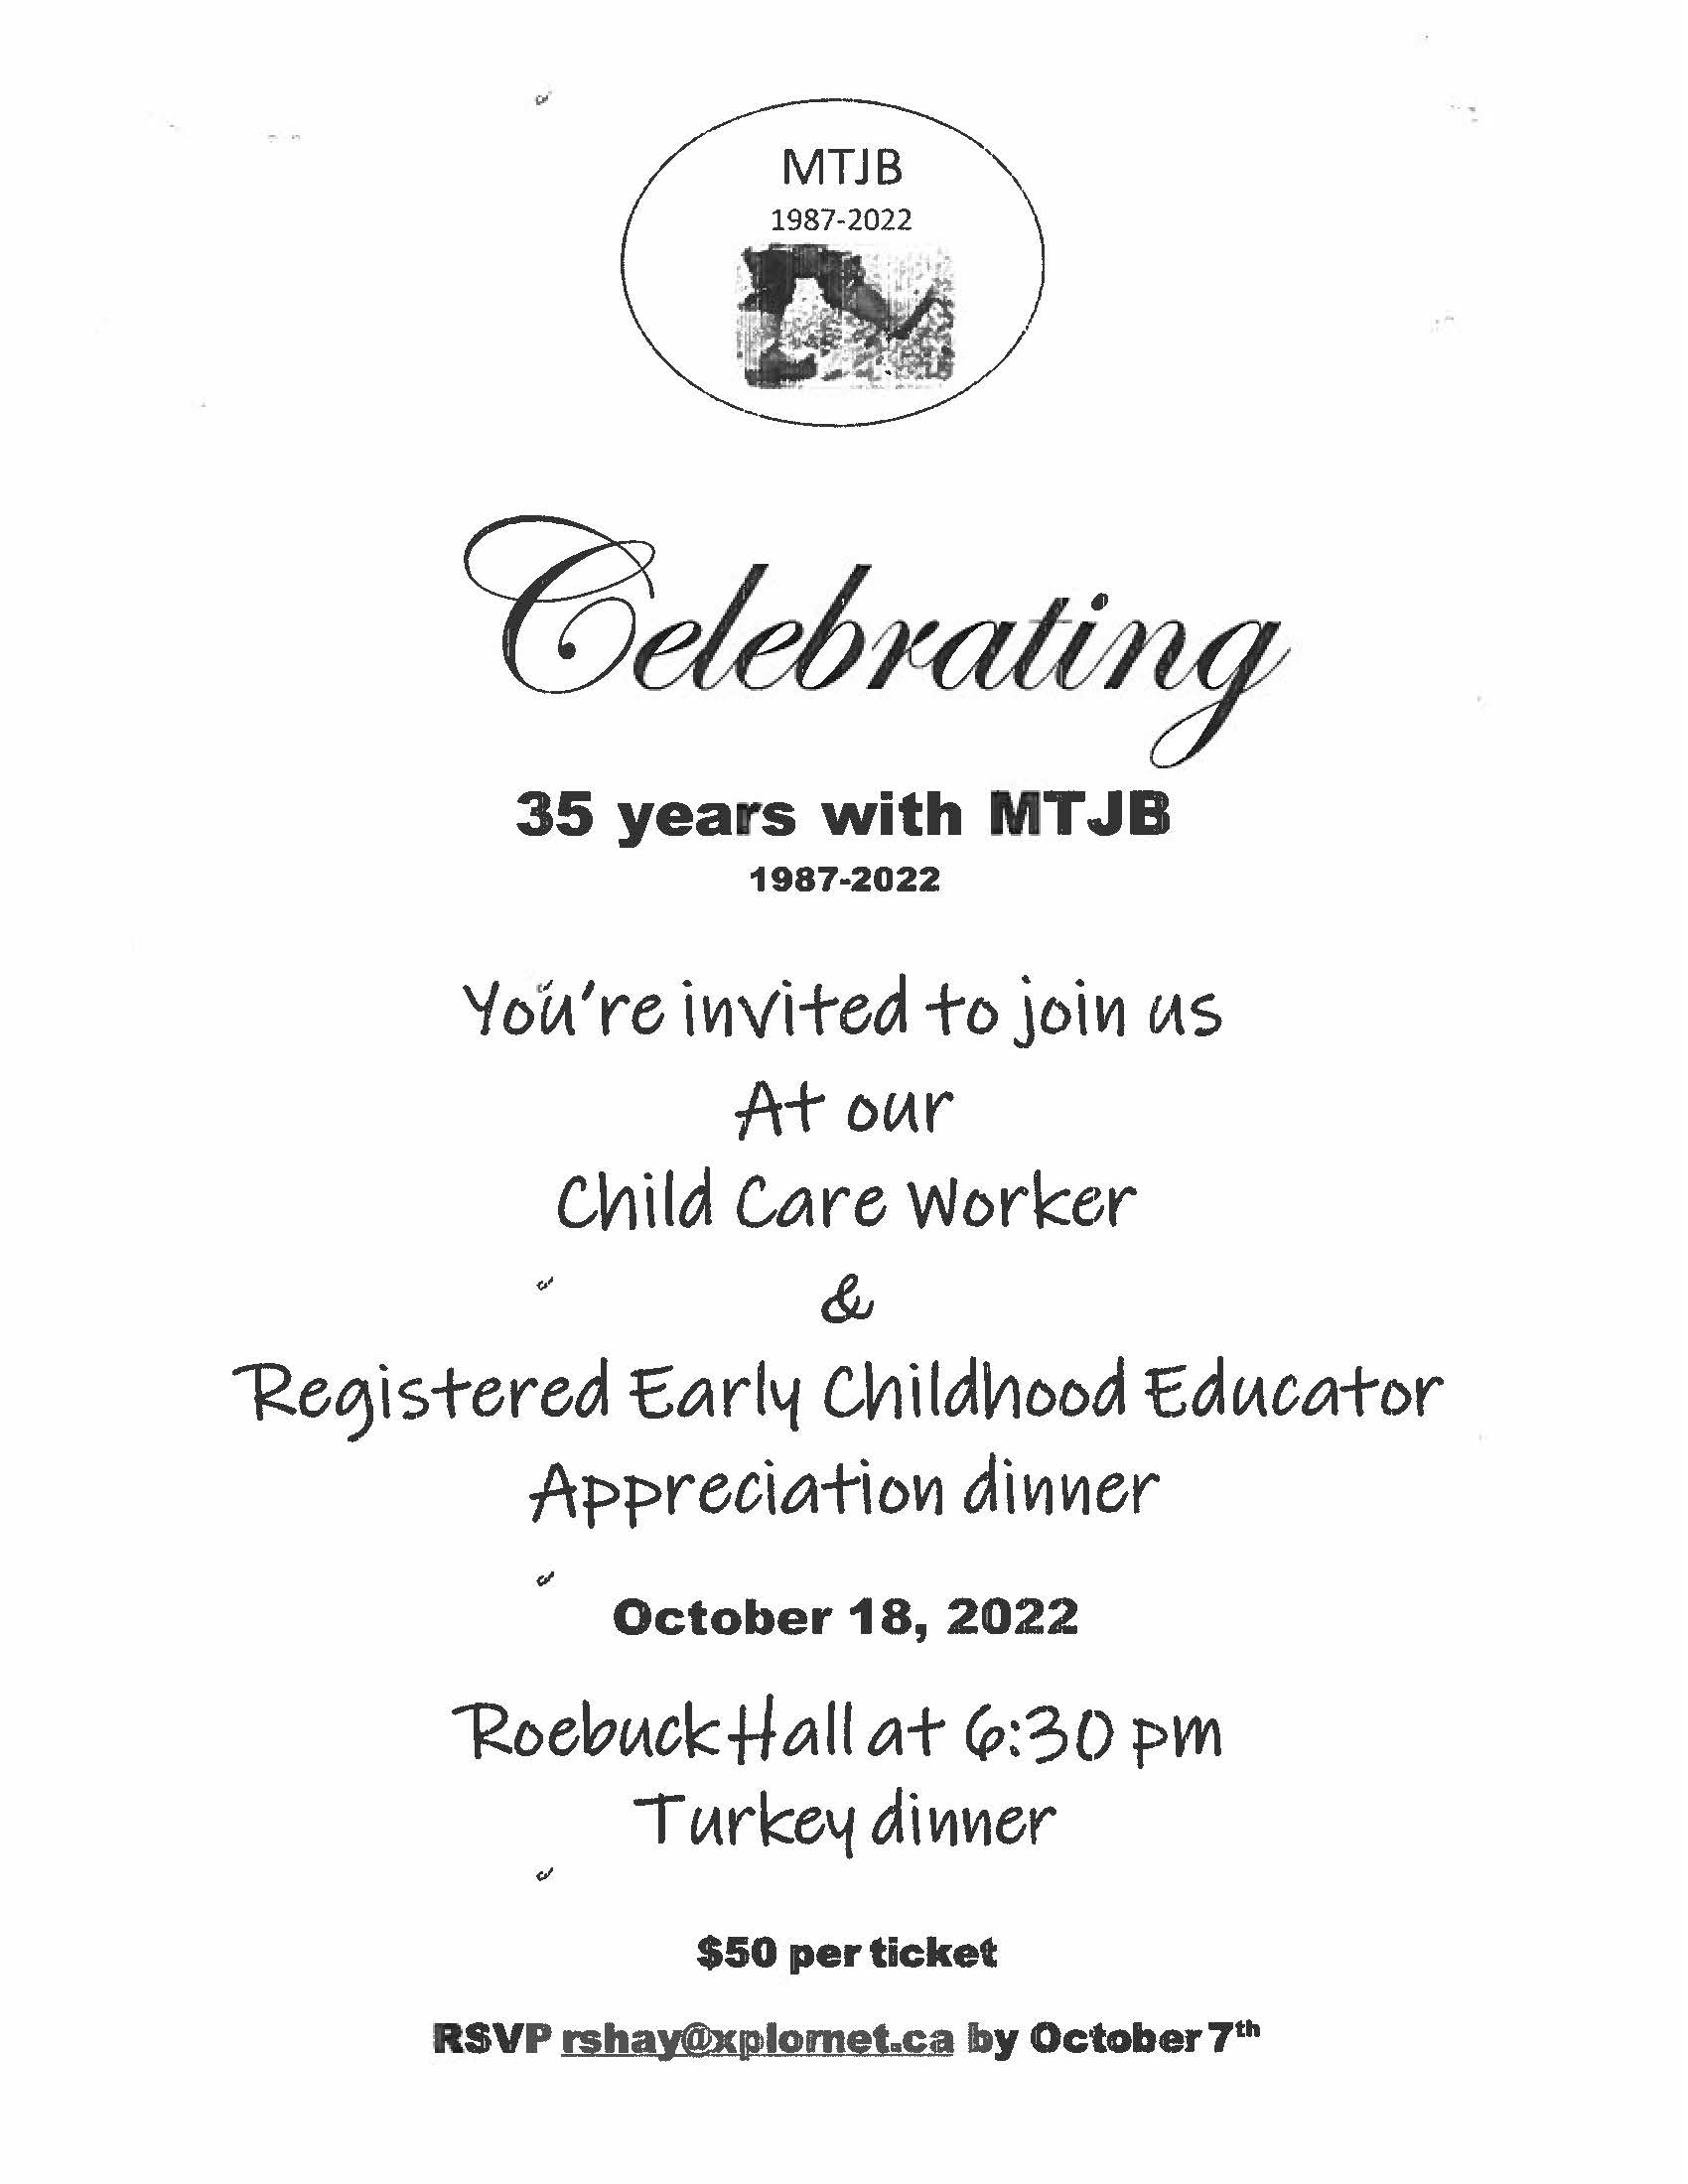 poster for the childhood educator dinner on October 18, 2022